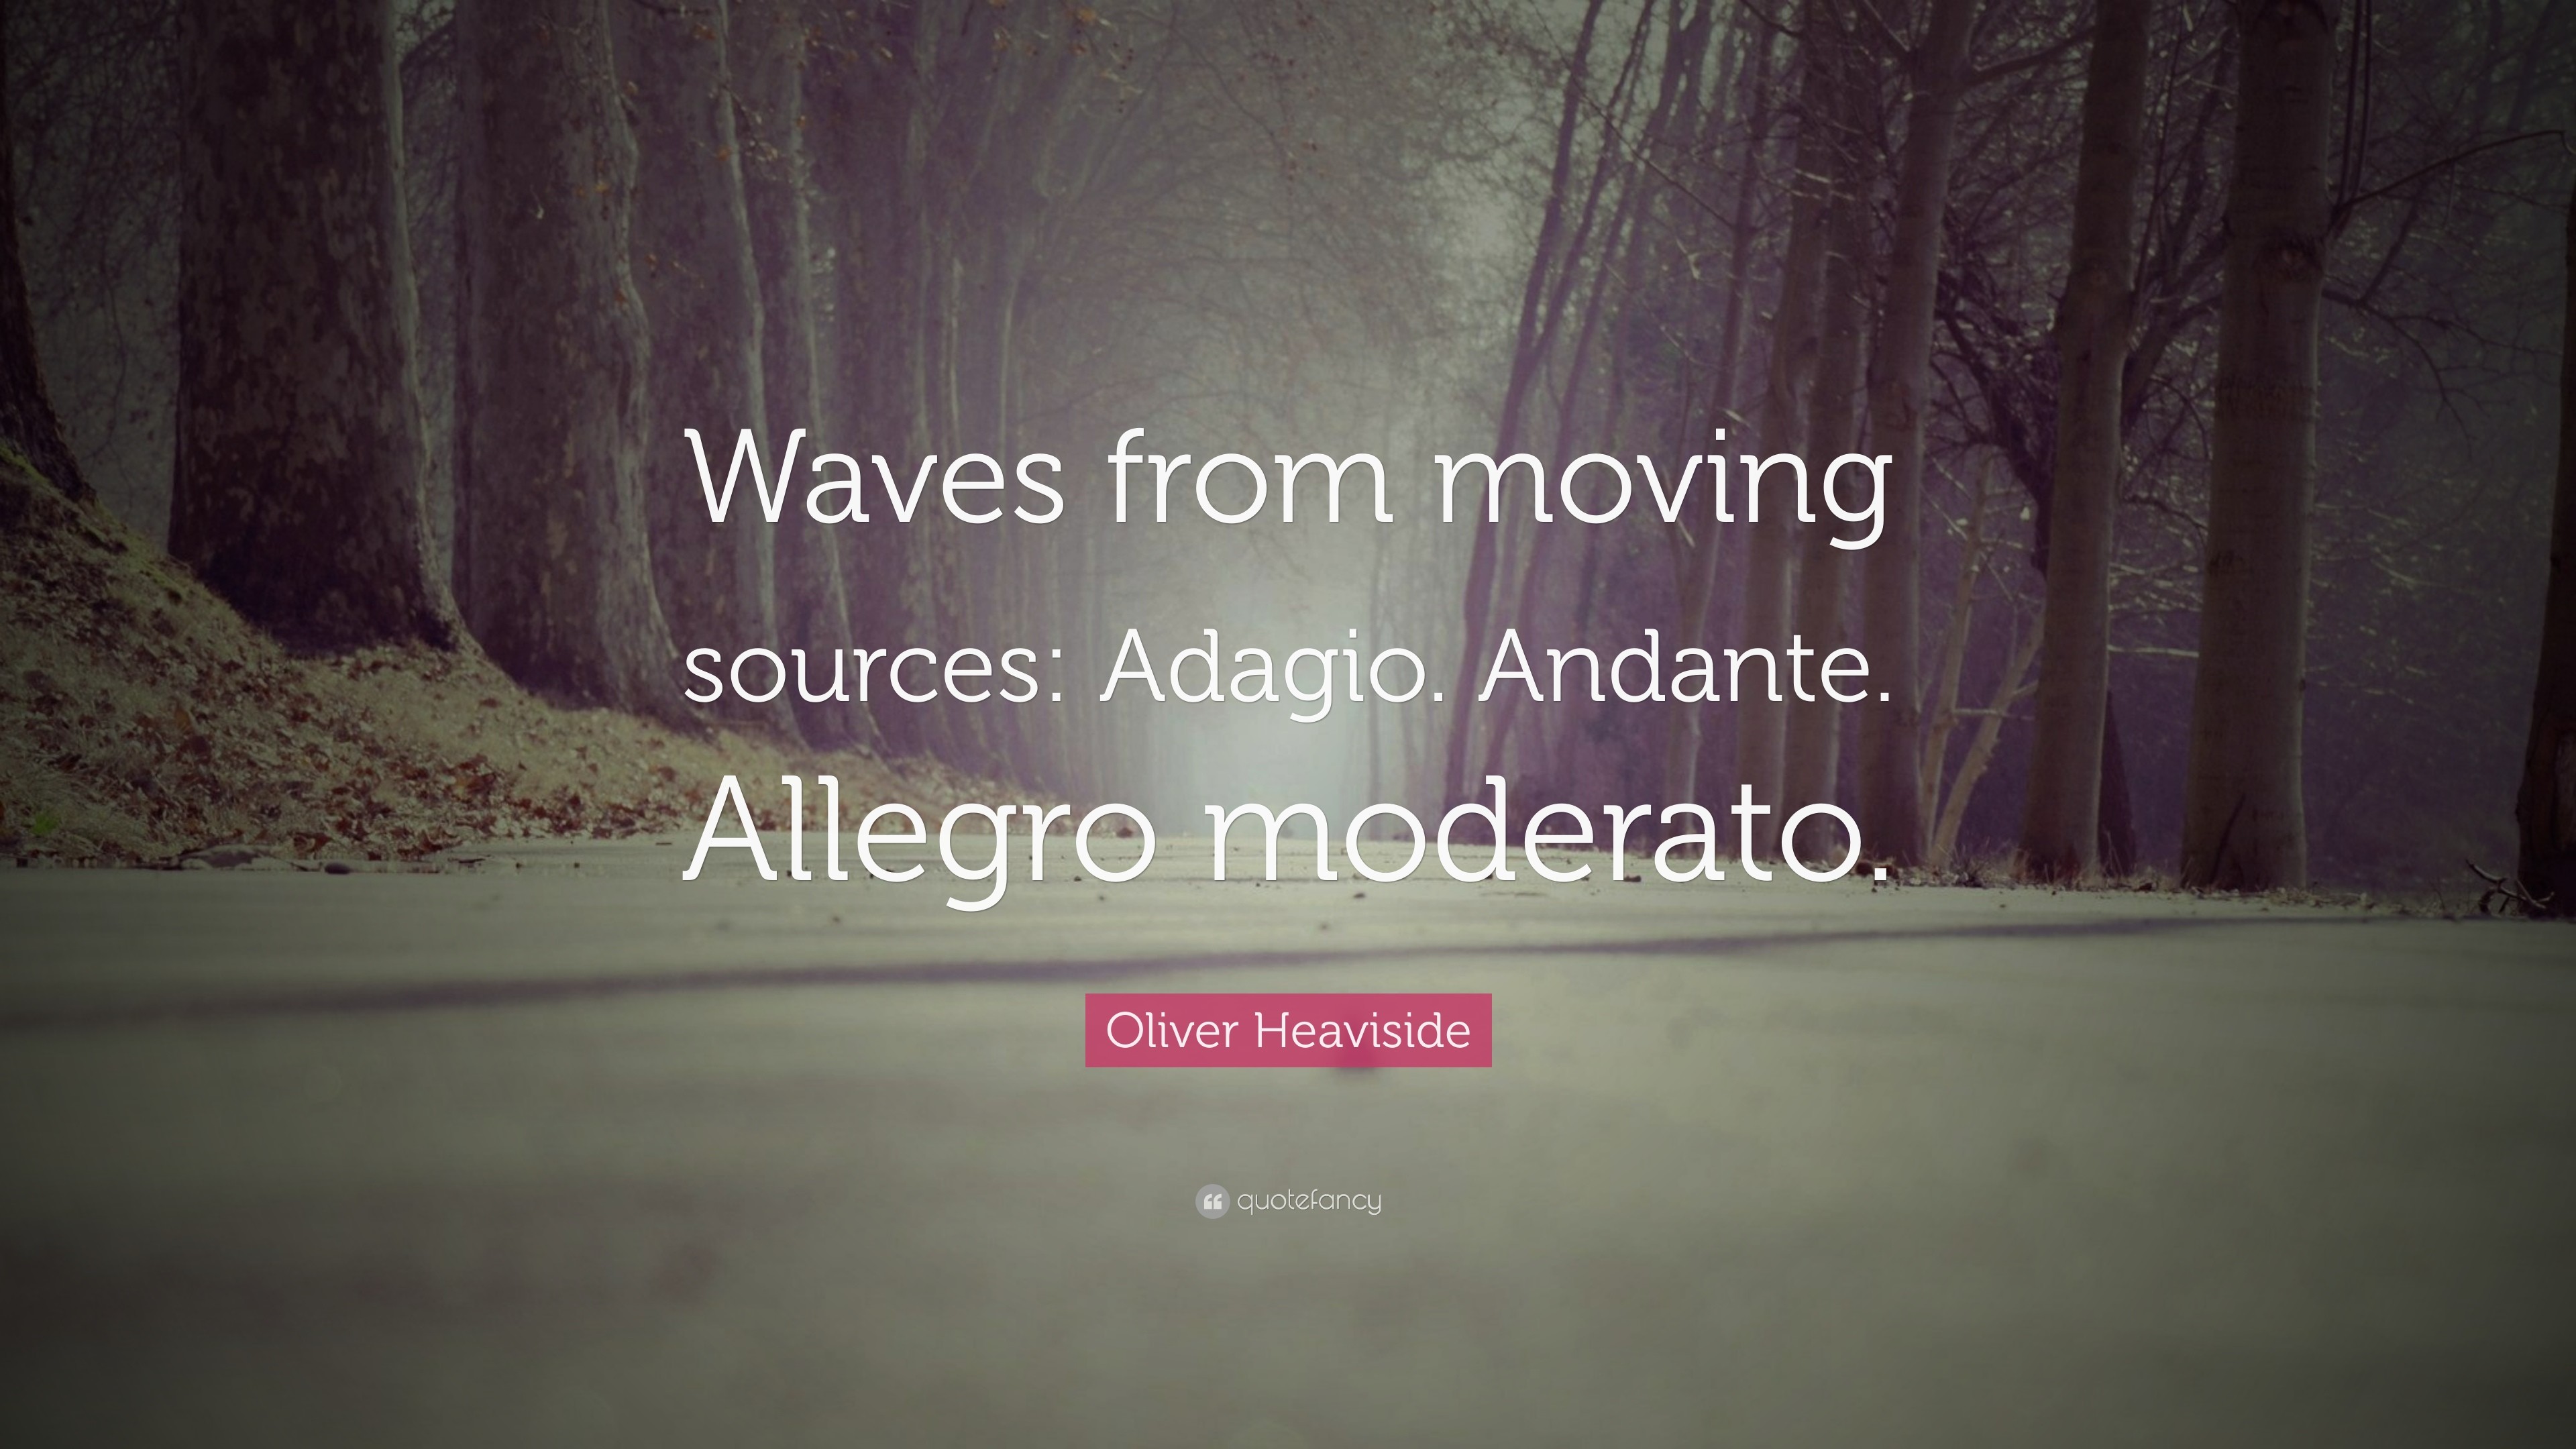 3840x2160 Oliver Heaviside Quote: “Waves from moving sources: Adagio. Andante.  Allegro moderato